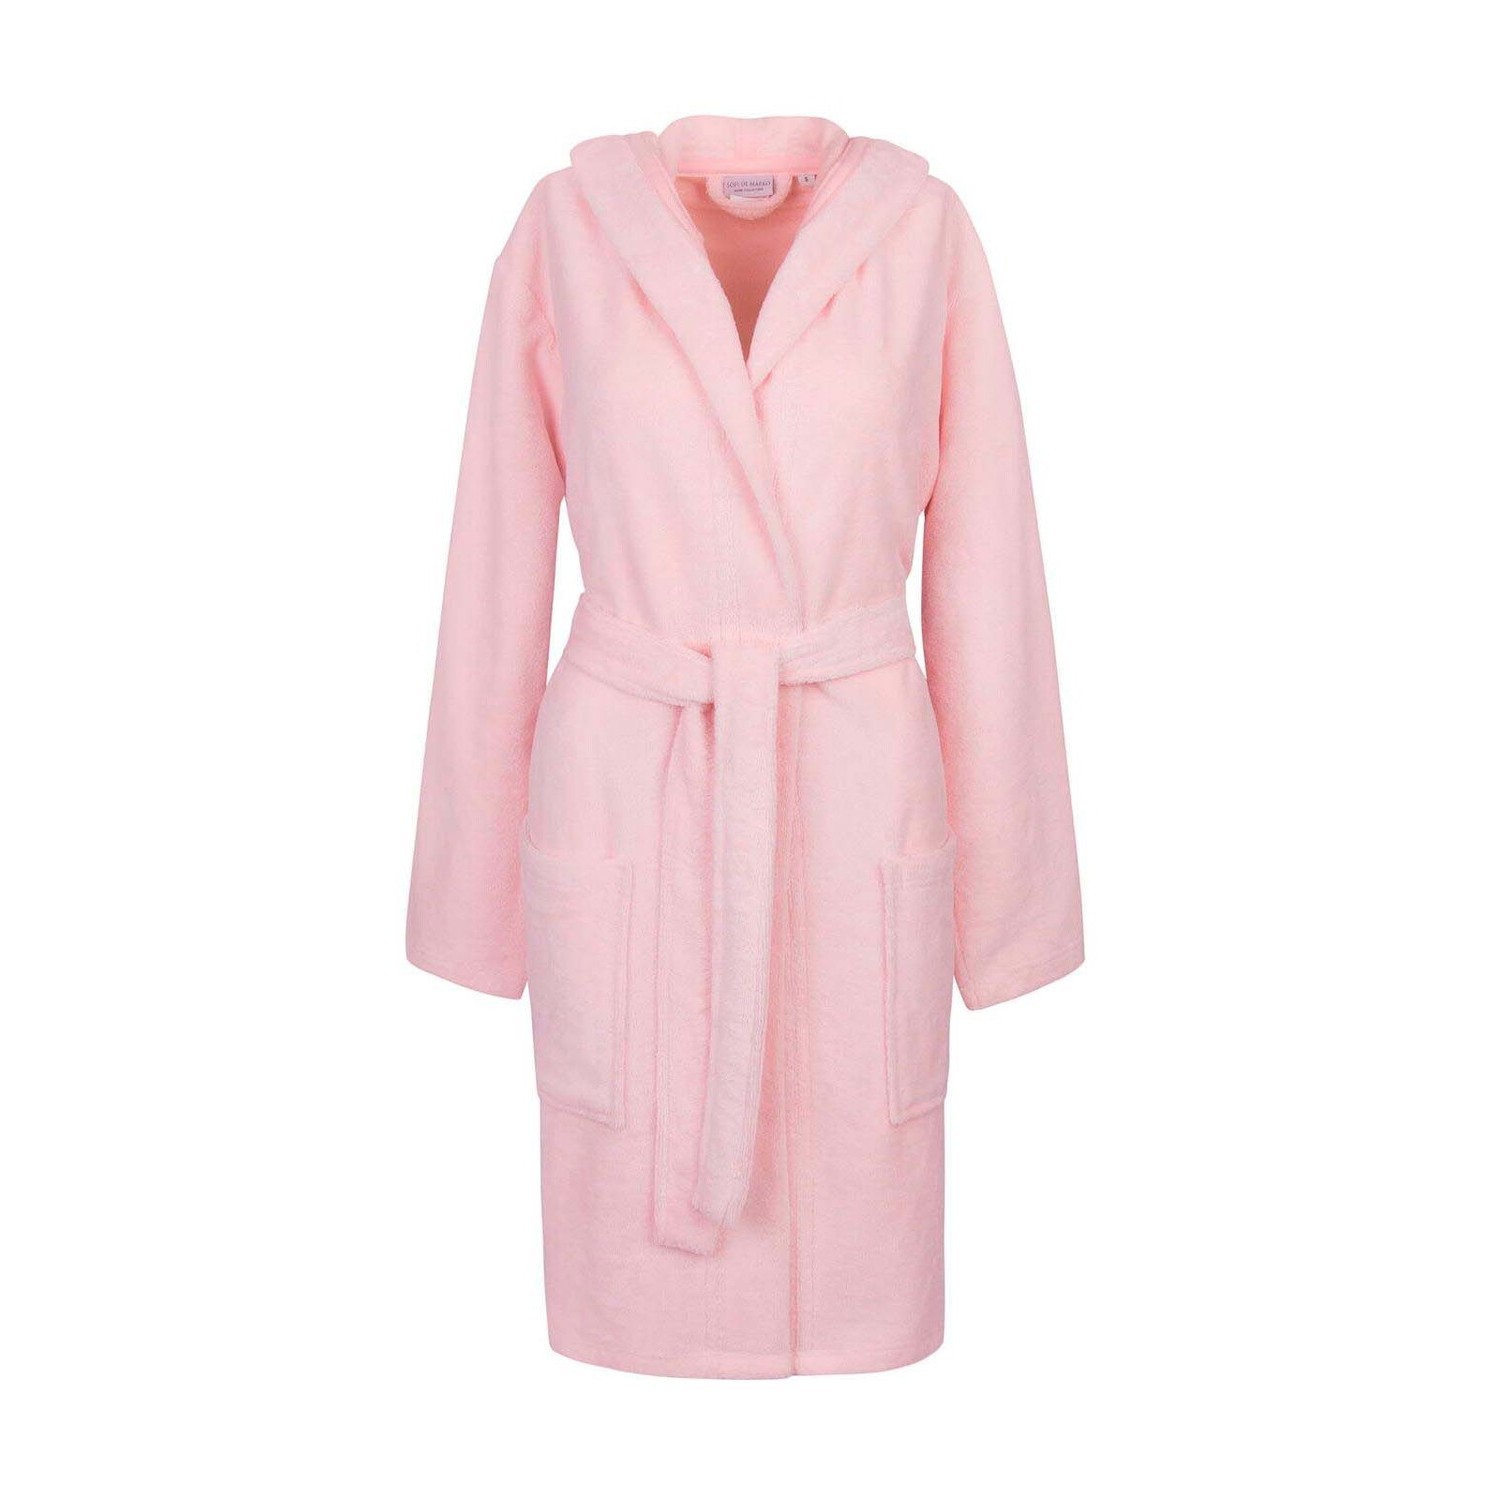 Банный халат Шанти цвет: розовый (M)